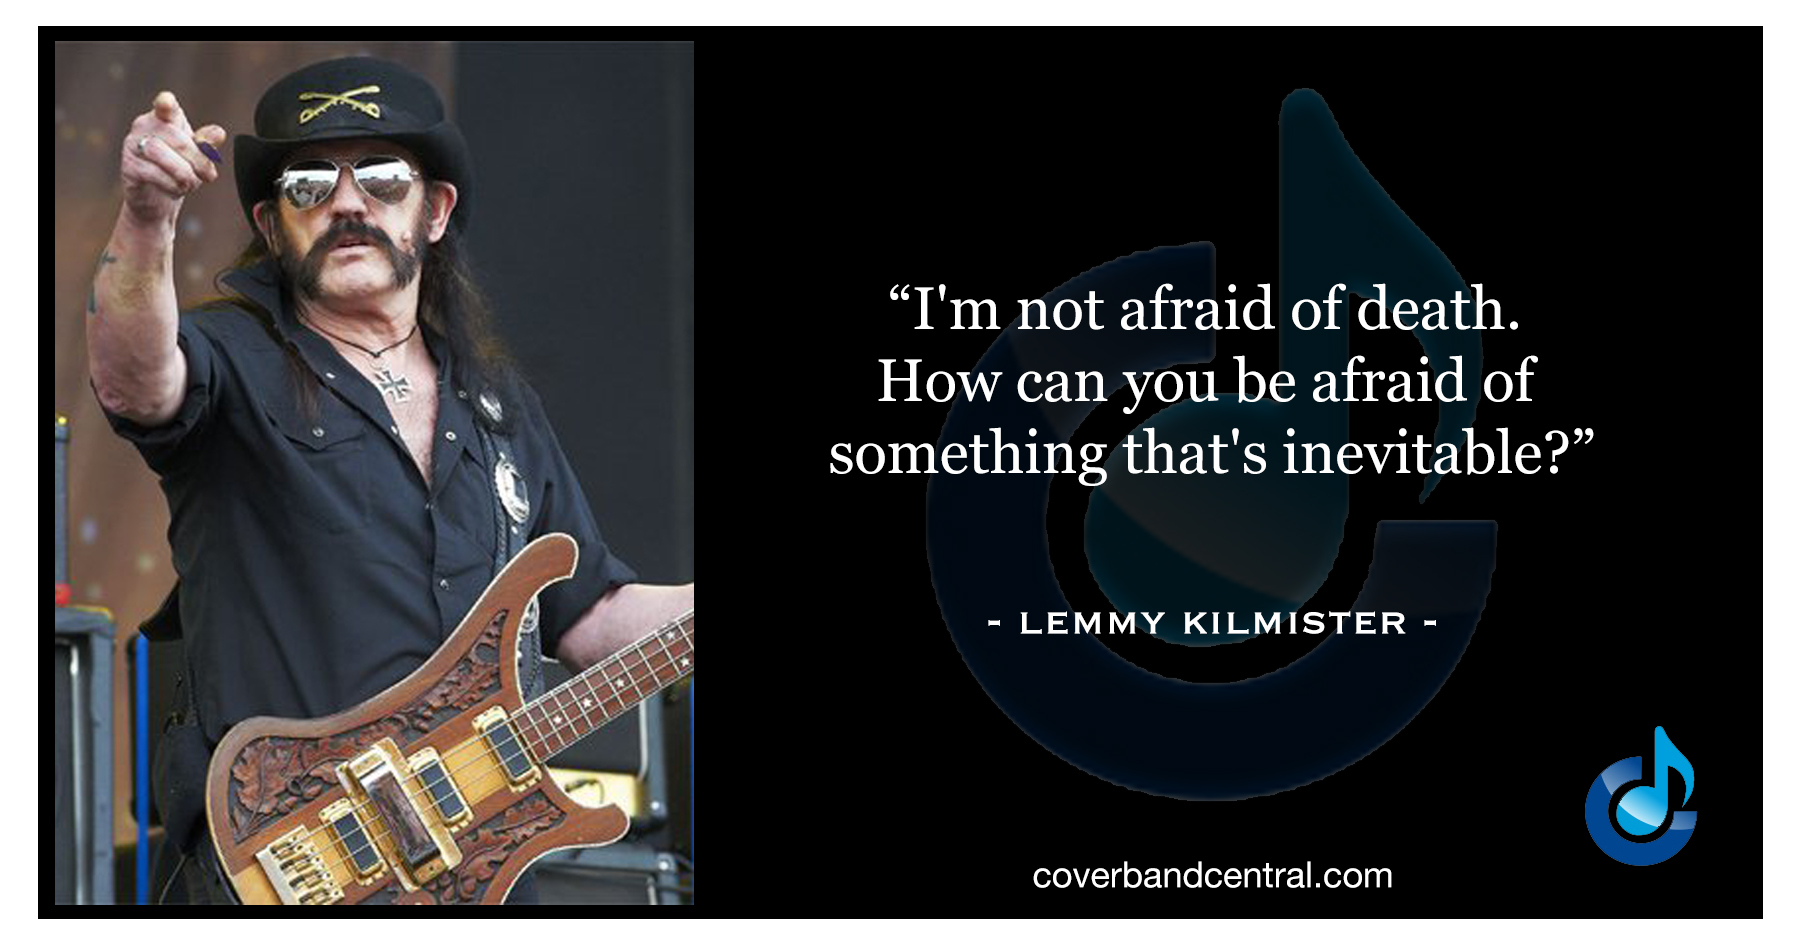 Lemmy Kilmister quote